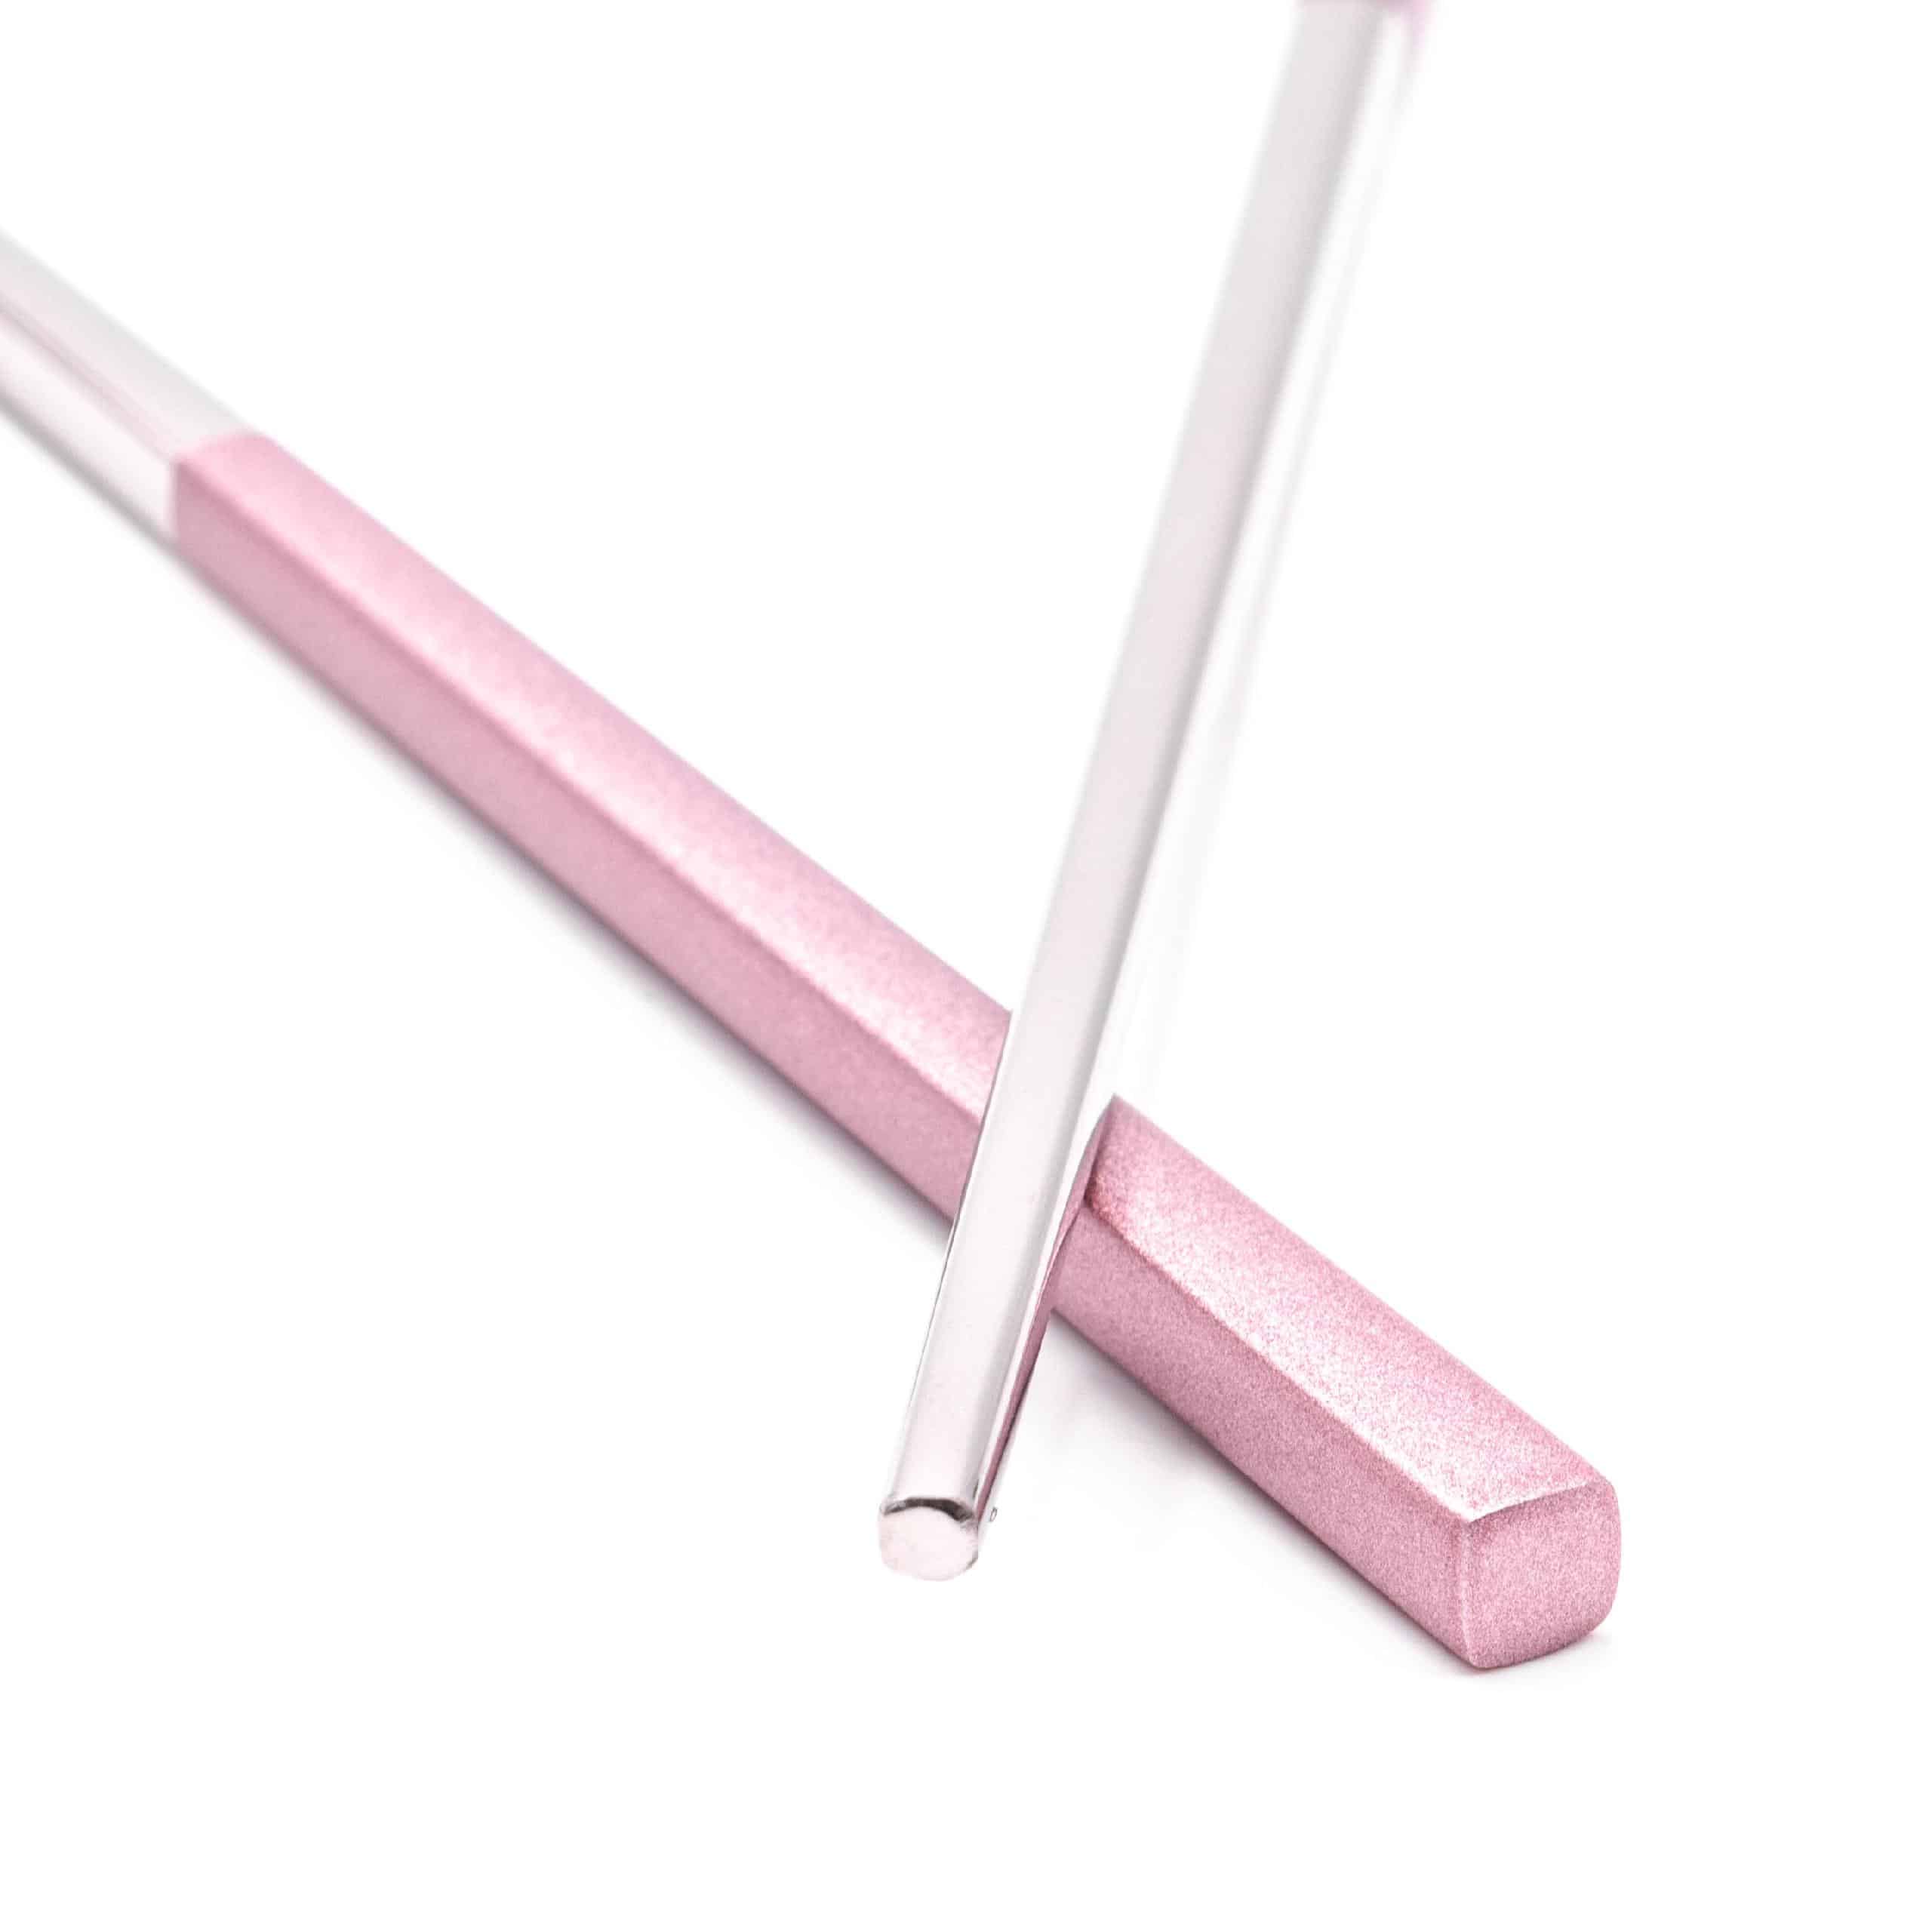 Chopstick Set (1 Pair) - Stainless Steel, pink, silver, 23 cm long, Reusable